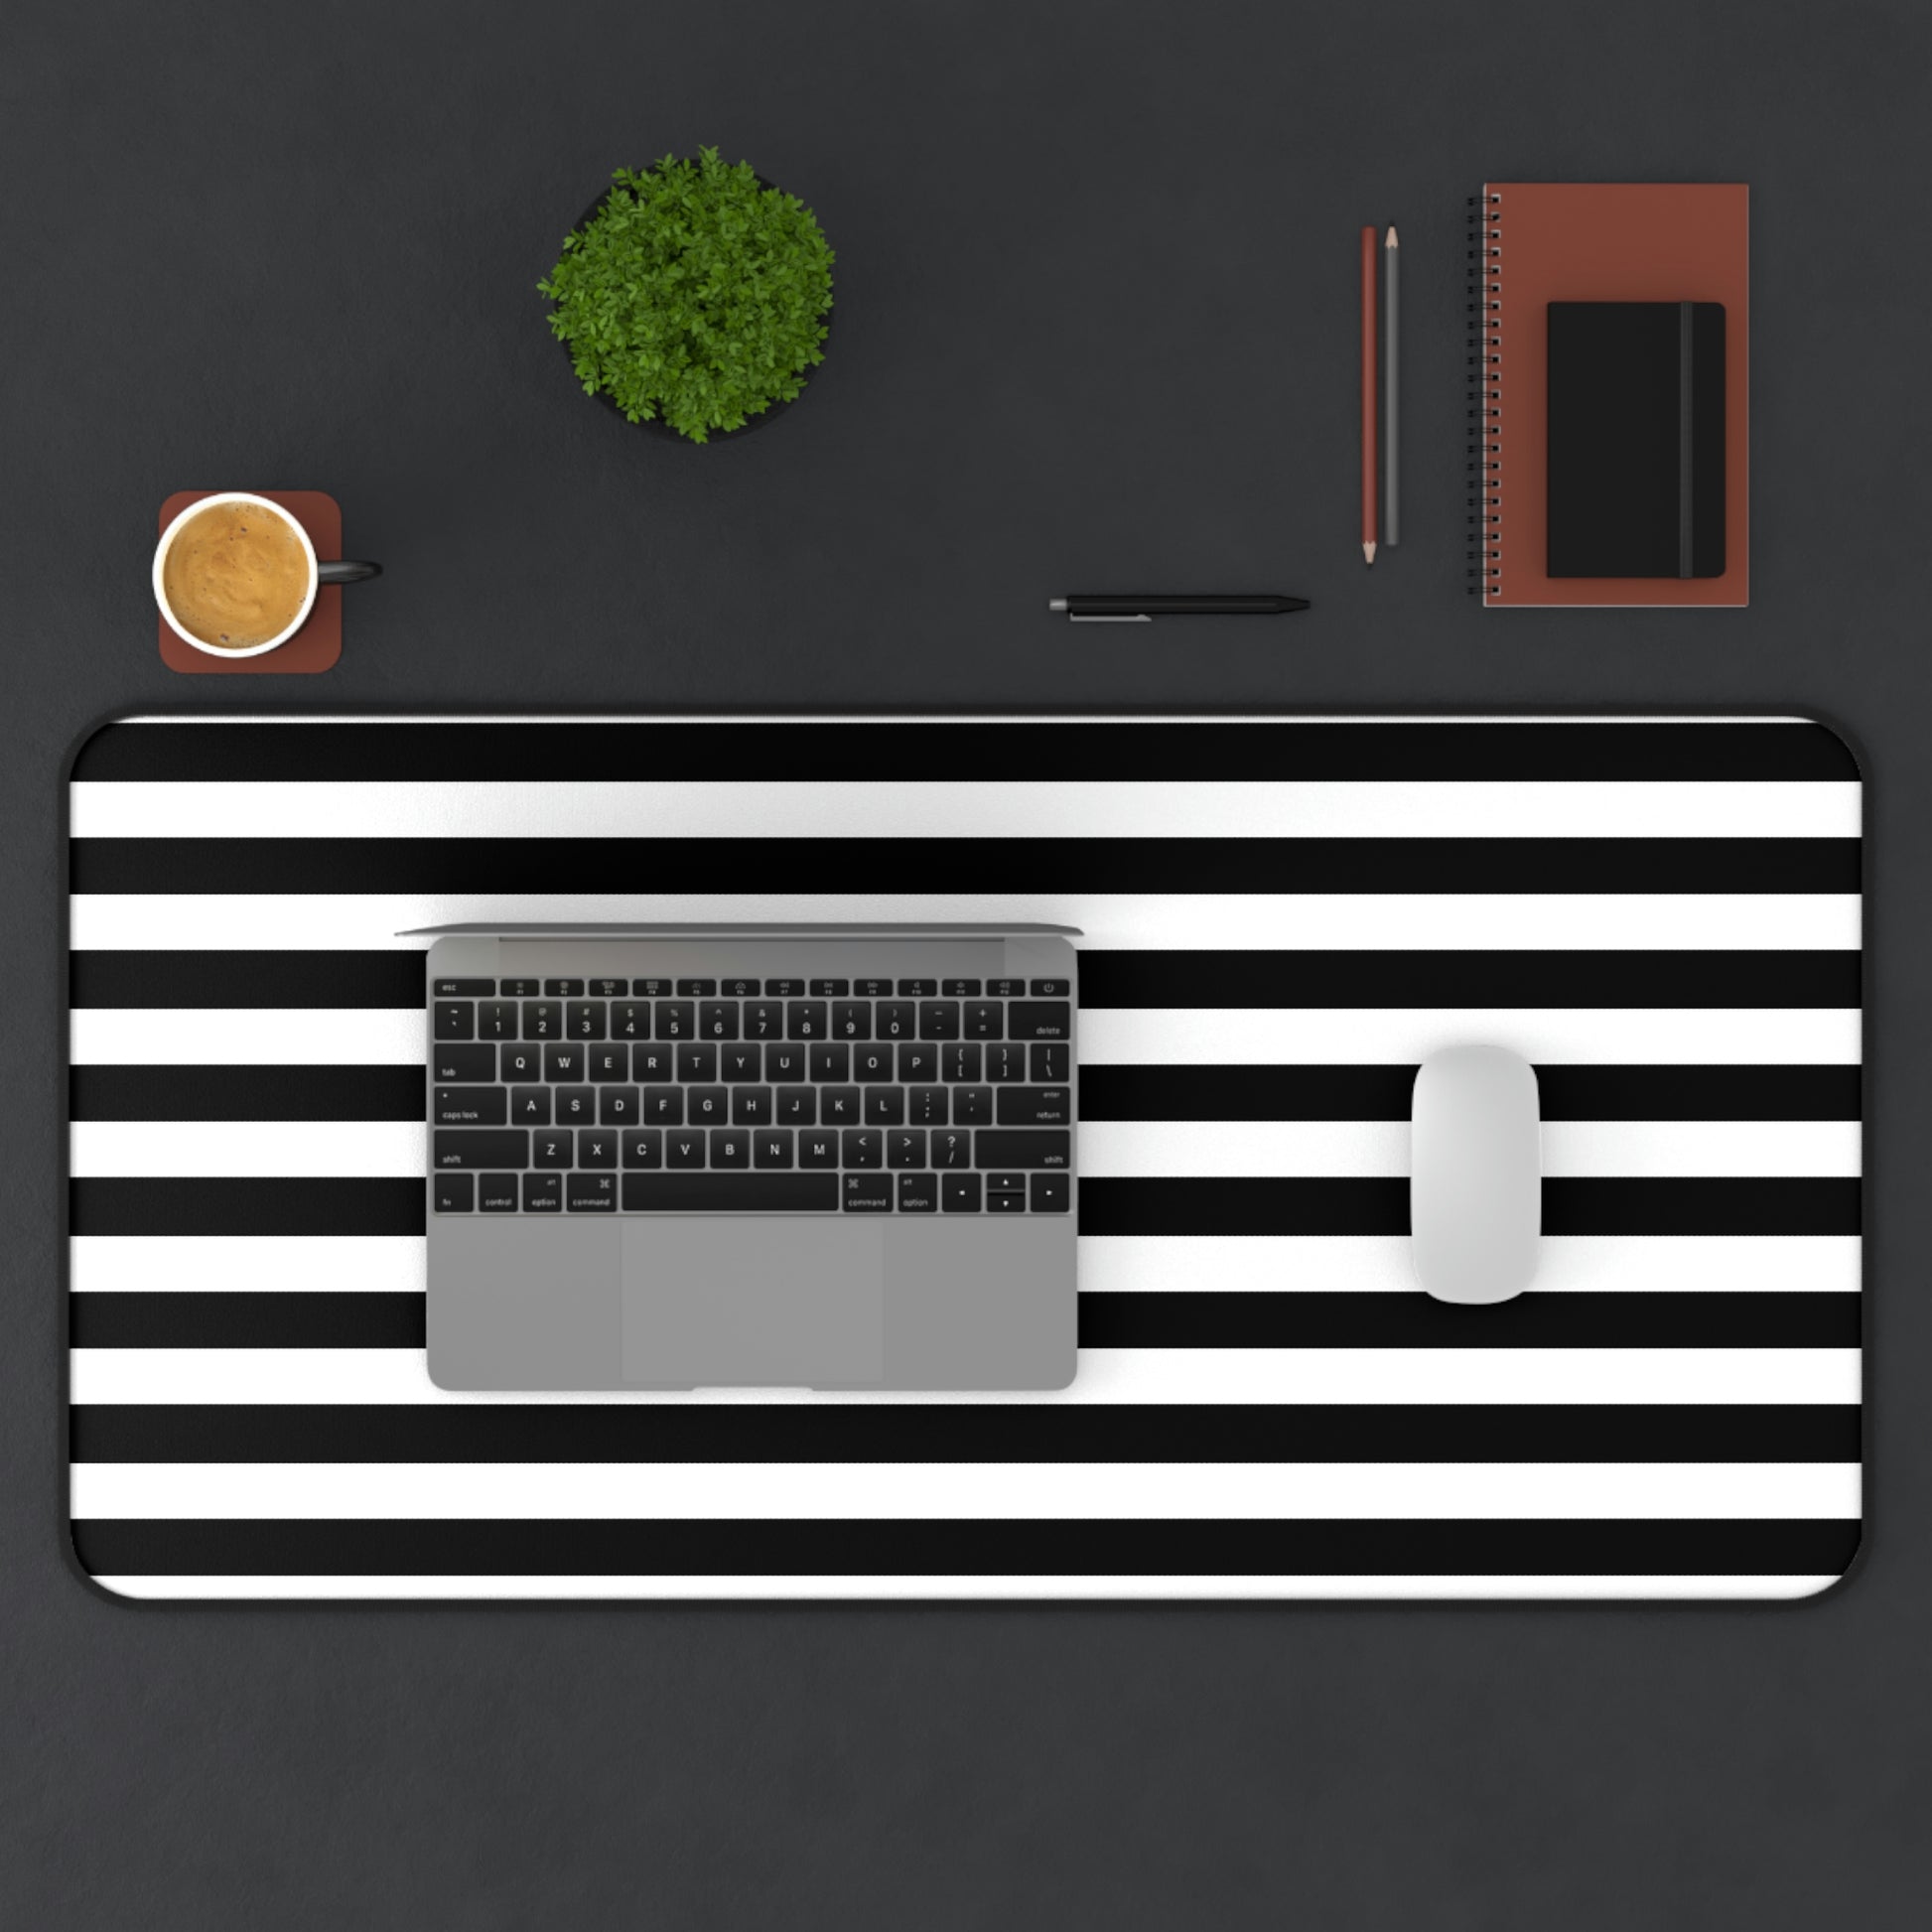 Black & White Striped Desk Mat - Desk Cookies